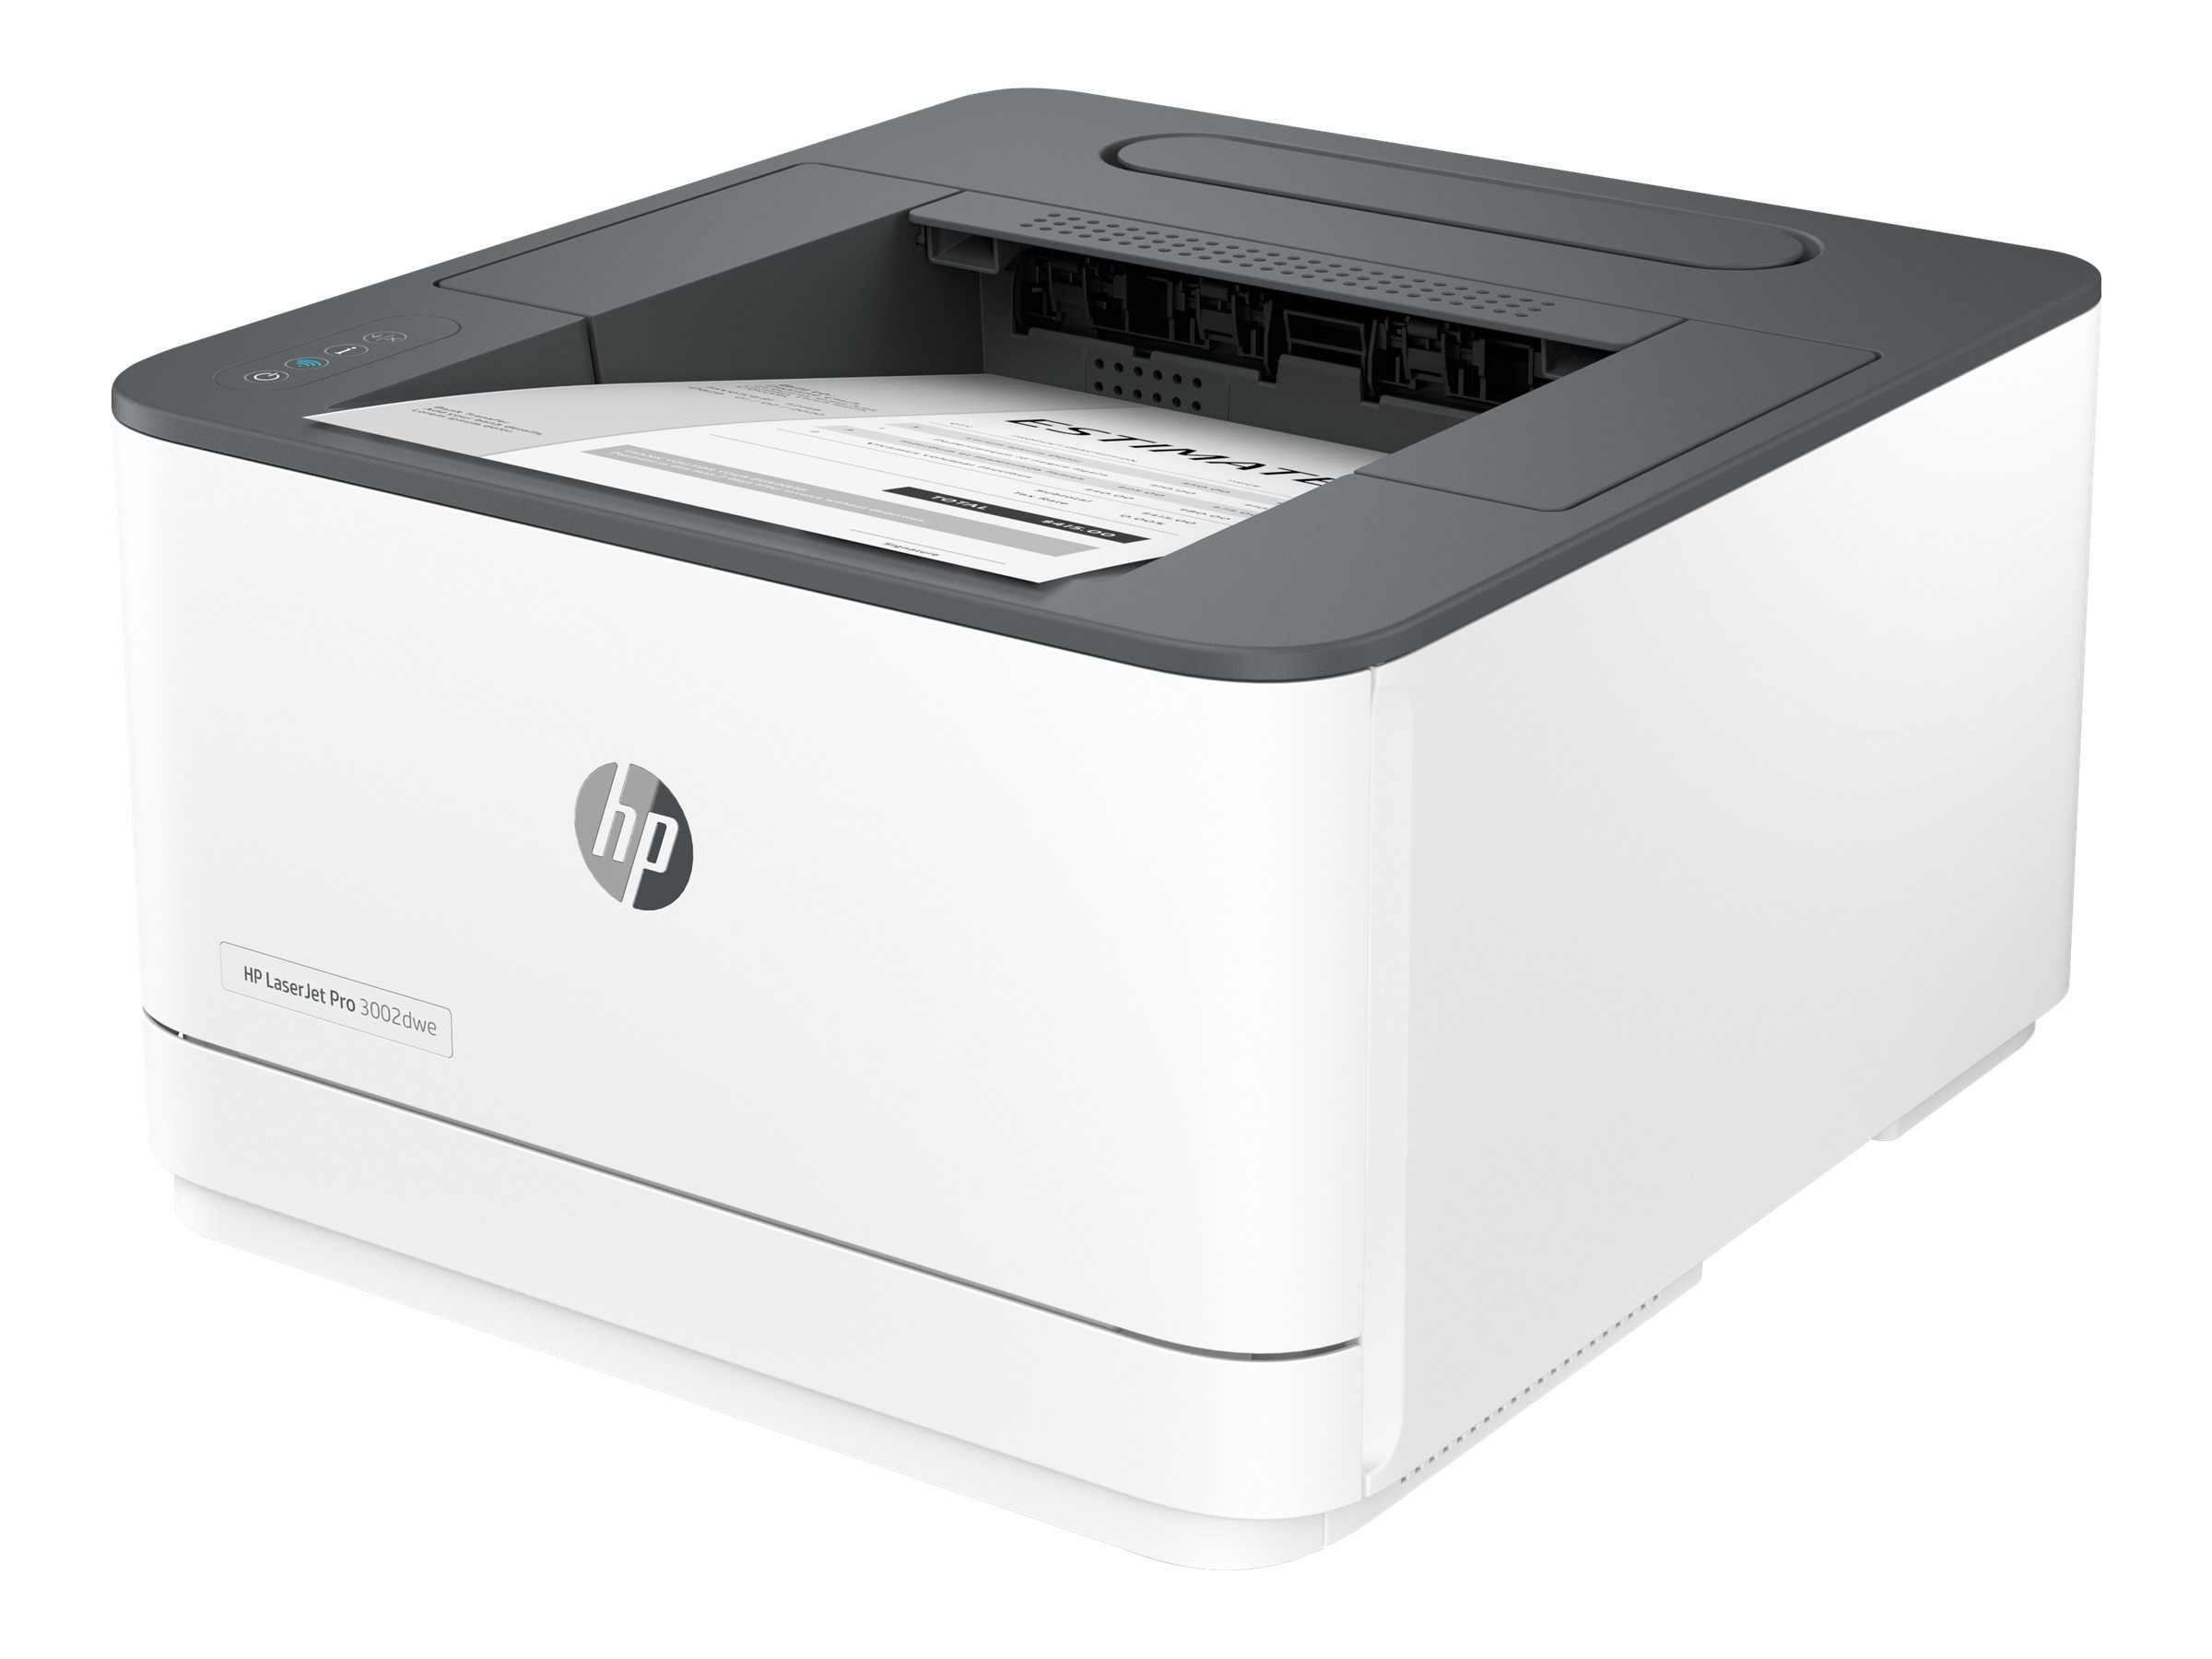 HP LaserJet Pro 3002dwe - imprimante laser monochrome A4 - Wifi